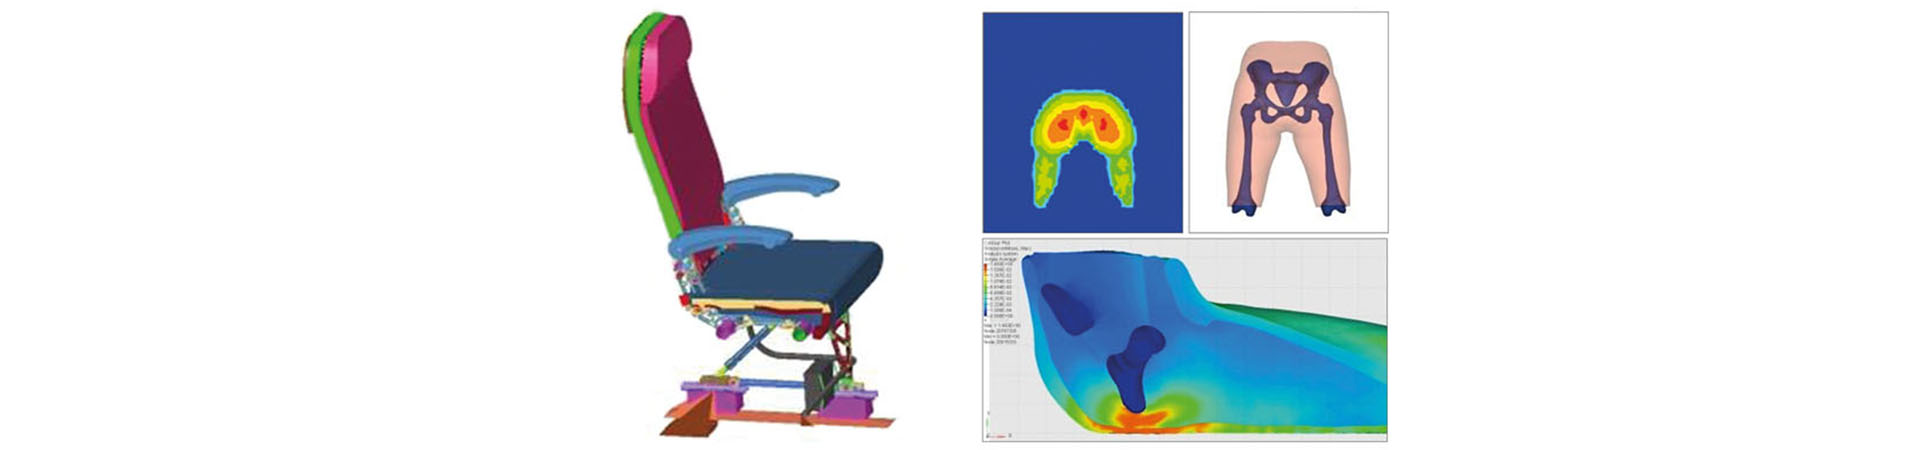 Improvement of Aircraft Passenger Seat Comfort Through Biomechanical Models and Numerical Simulation